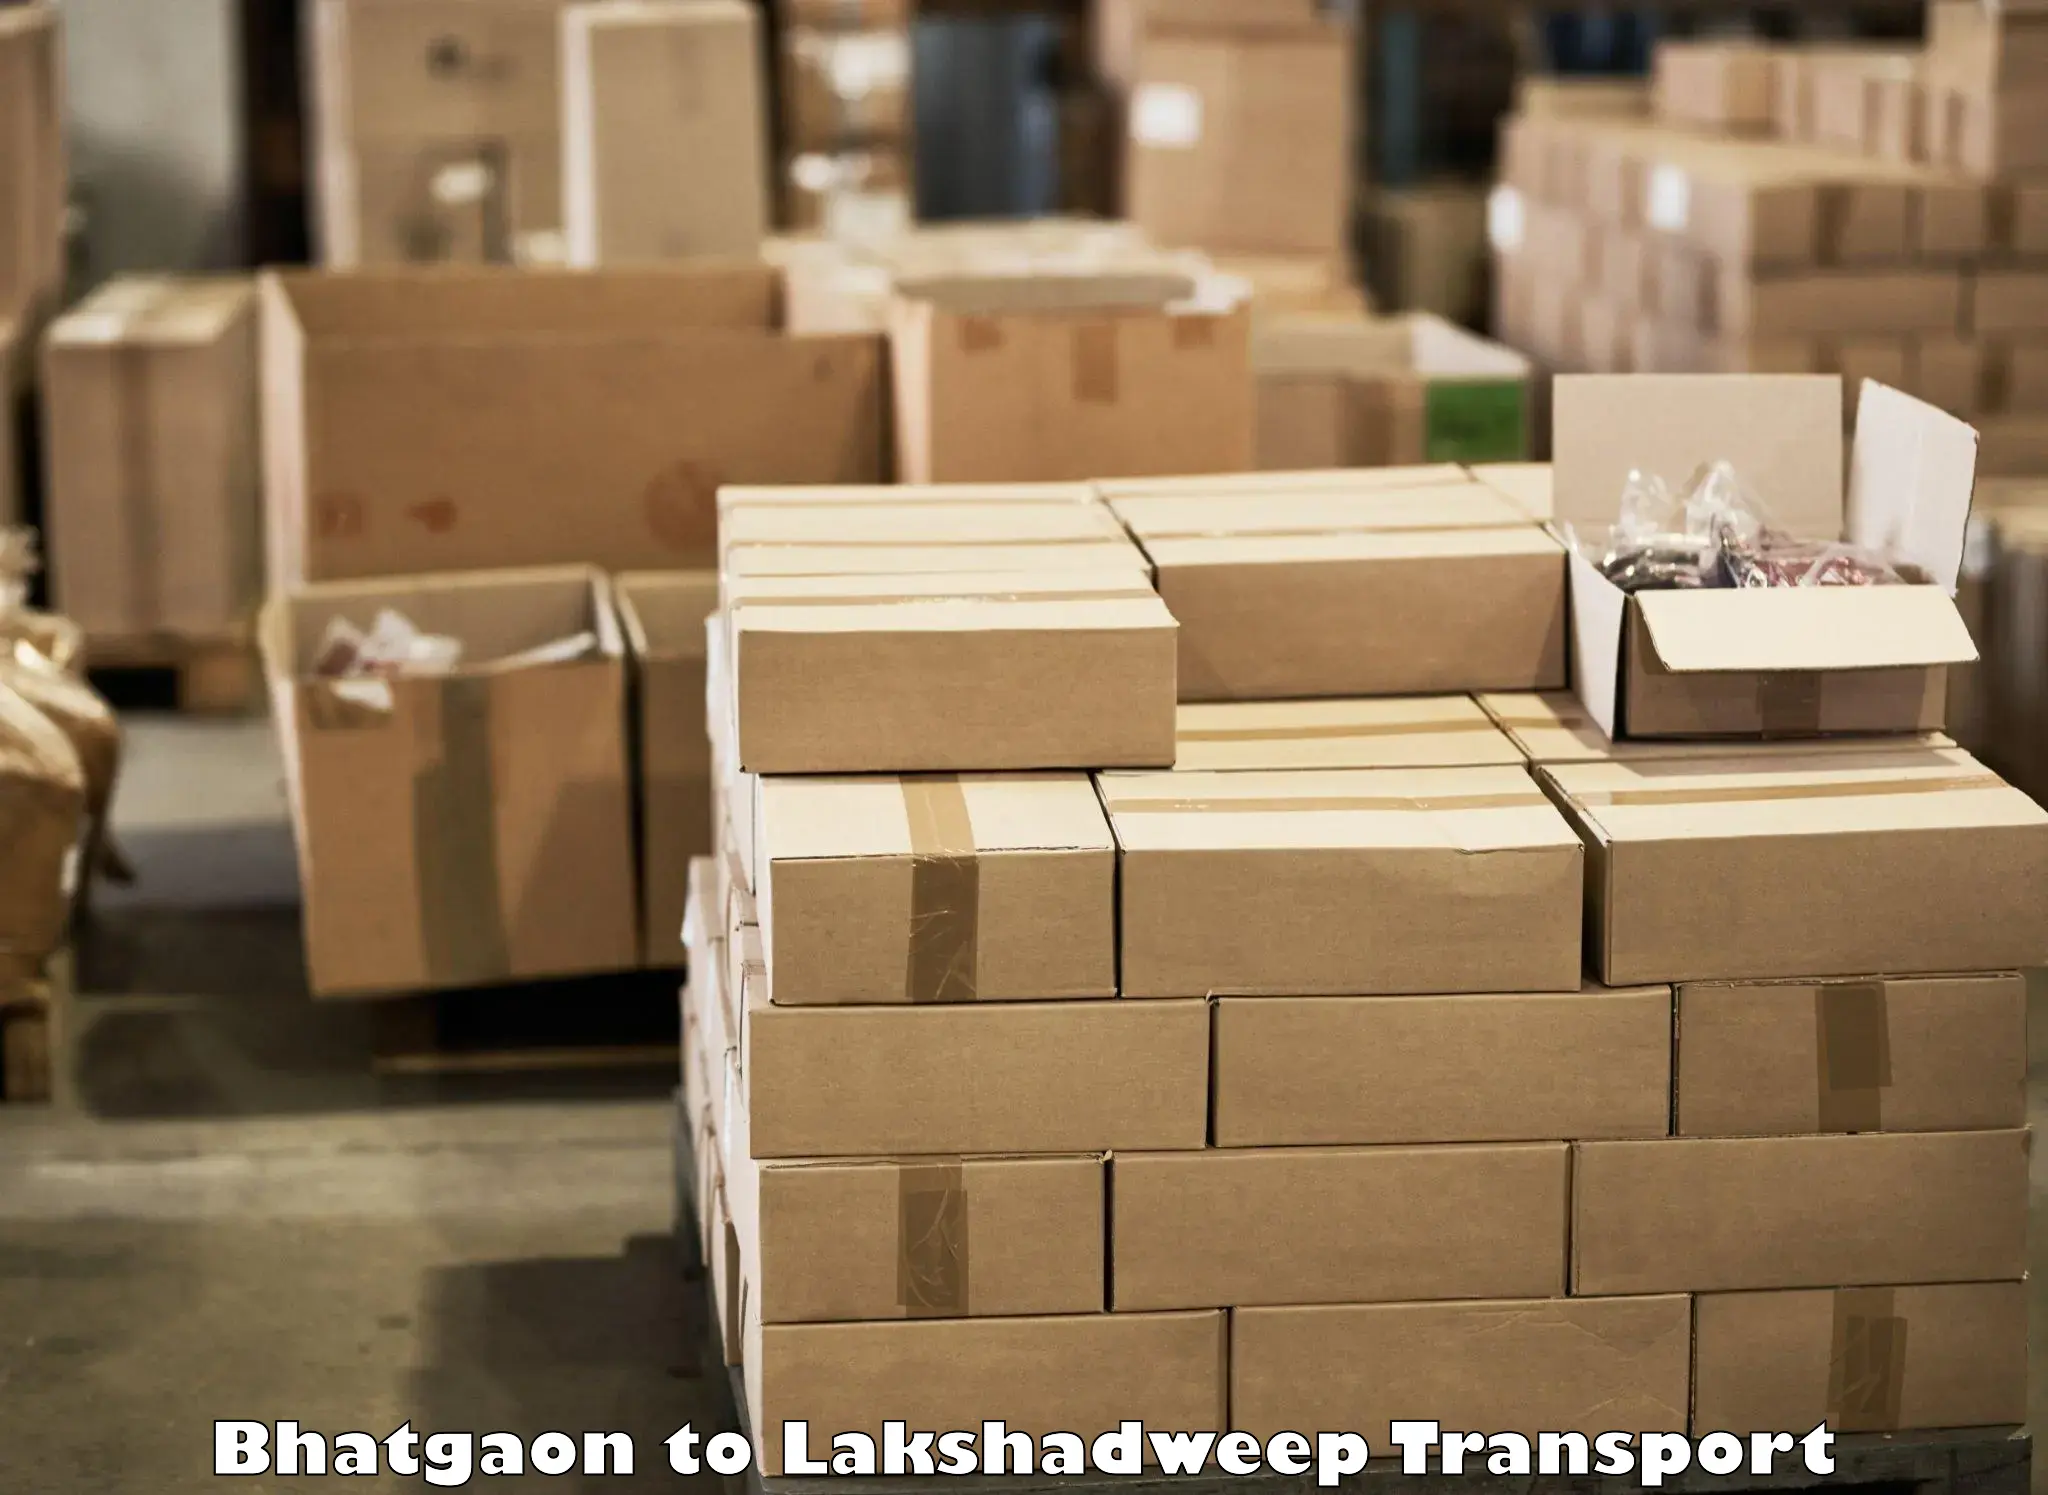 Vehicle transport services in Bhatgaon to Lakshadweep